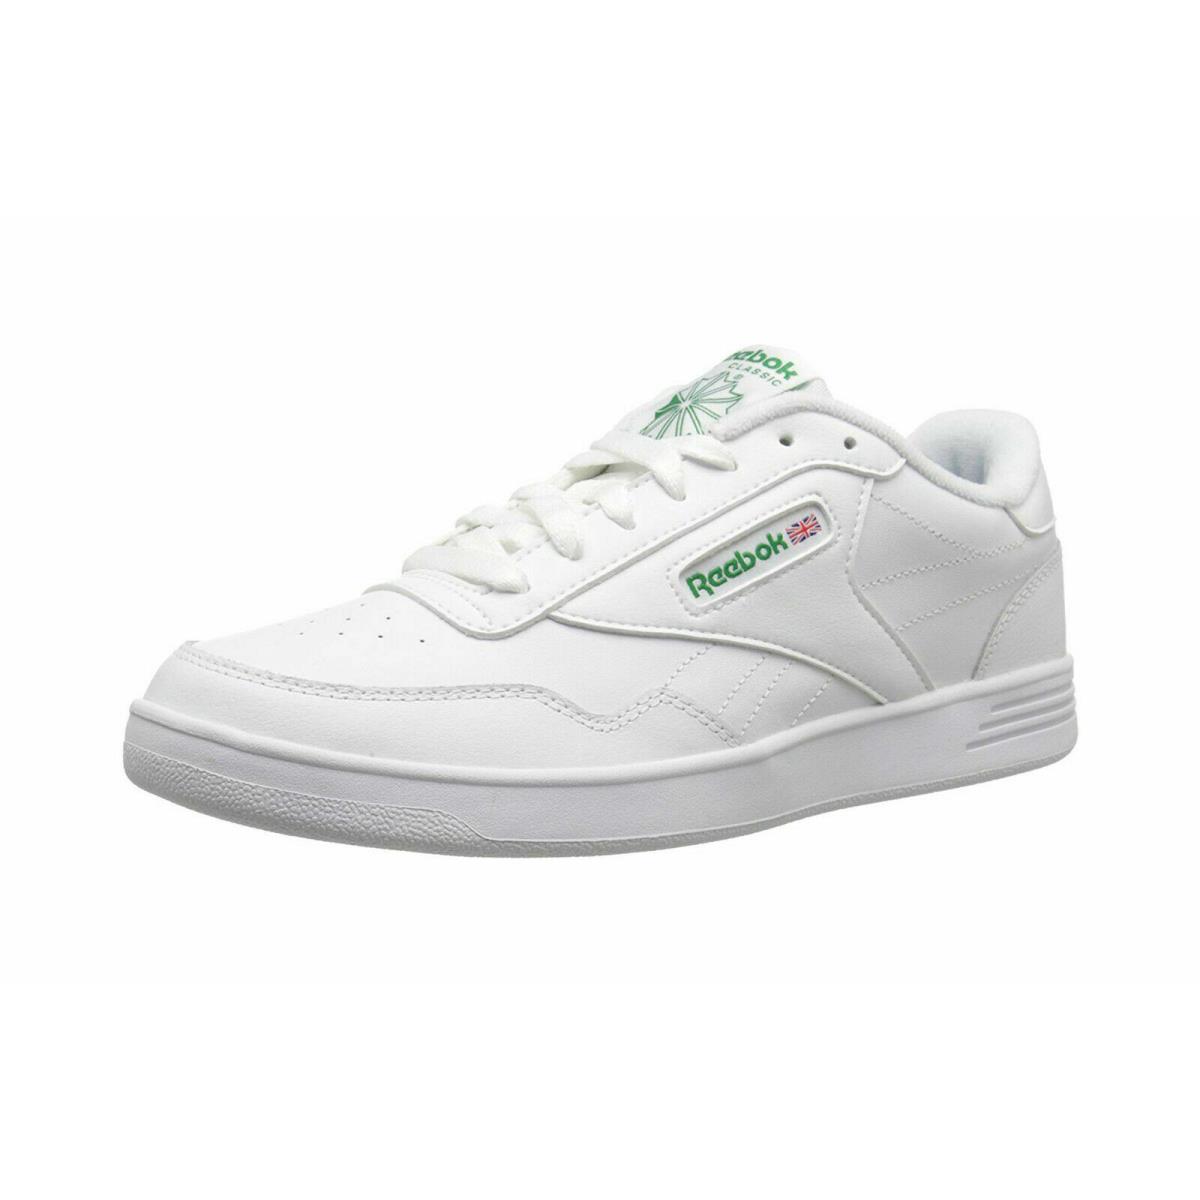 Reebok Club Memt White Green Memory Foam Men Tennis Shoes Synthetic Leather - White/Green